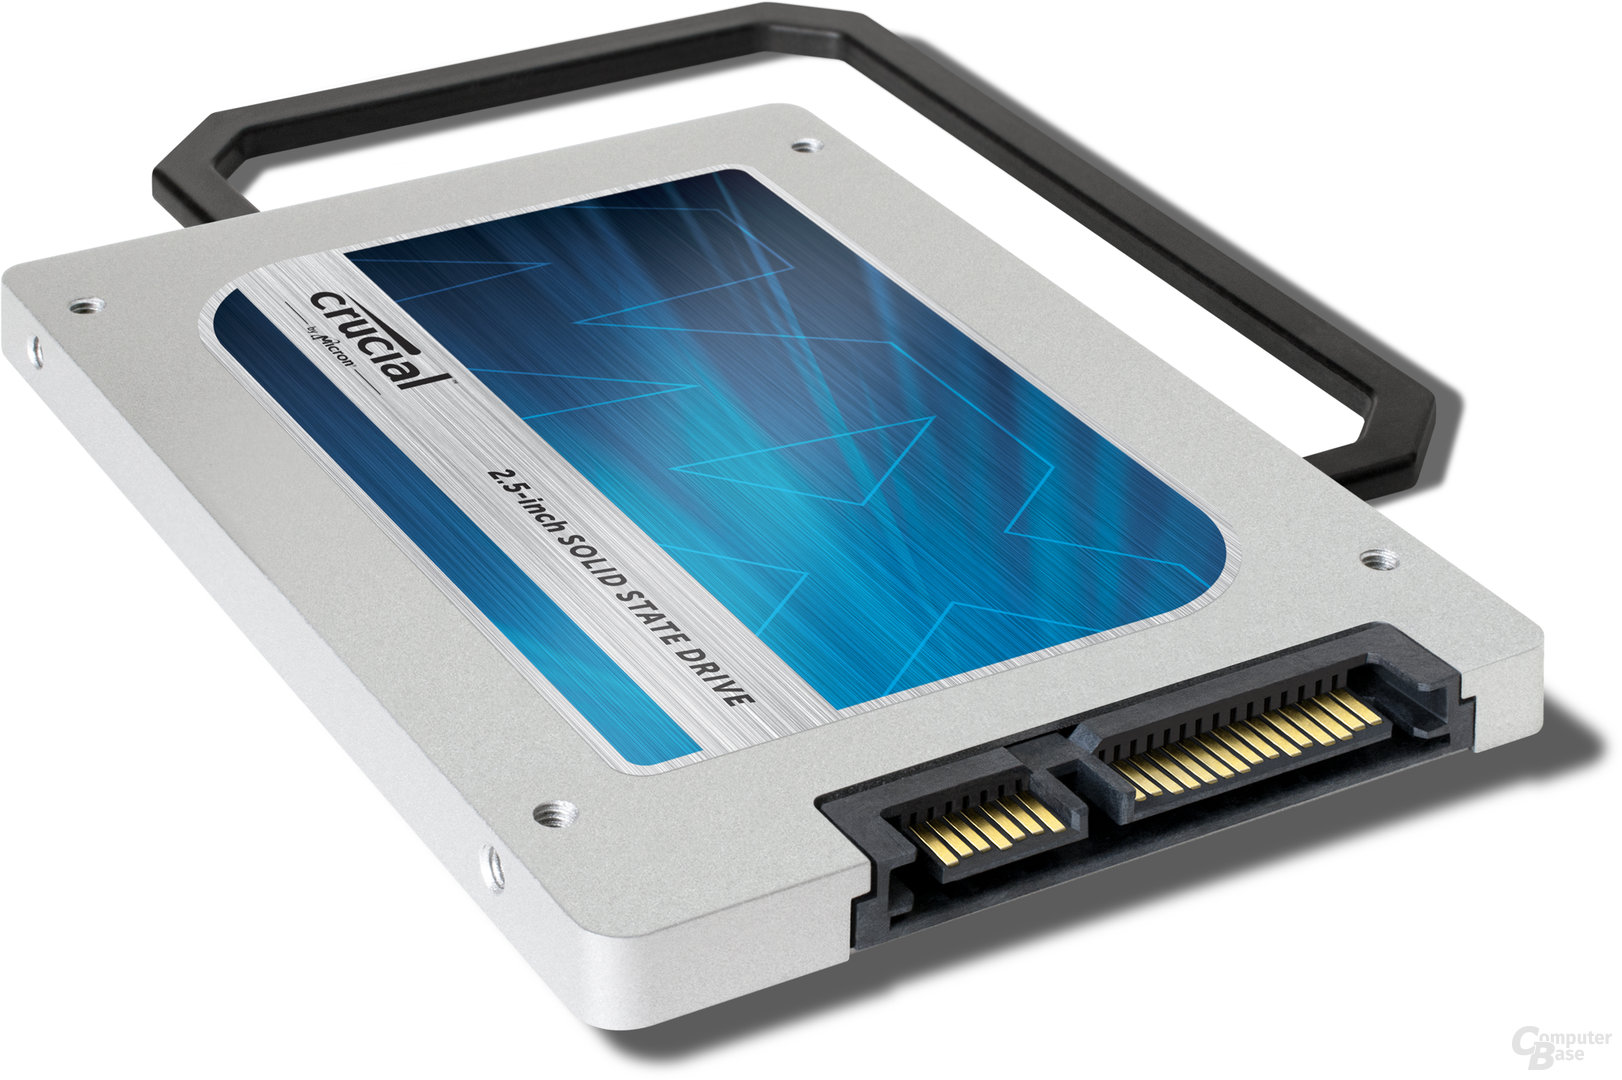 Ssd price. Твердотельный накопитель crucial ct256mx100ssd1. 256 Crucial mx100 SSD. SSD 512gb 2.5 SATA. Crucial_ct512mx100ssd1 512,1 GB.